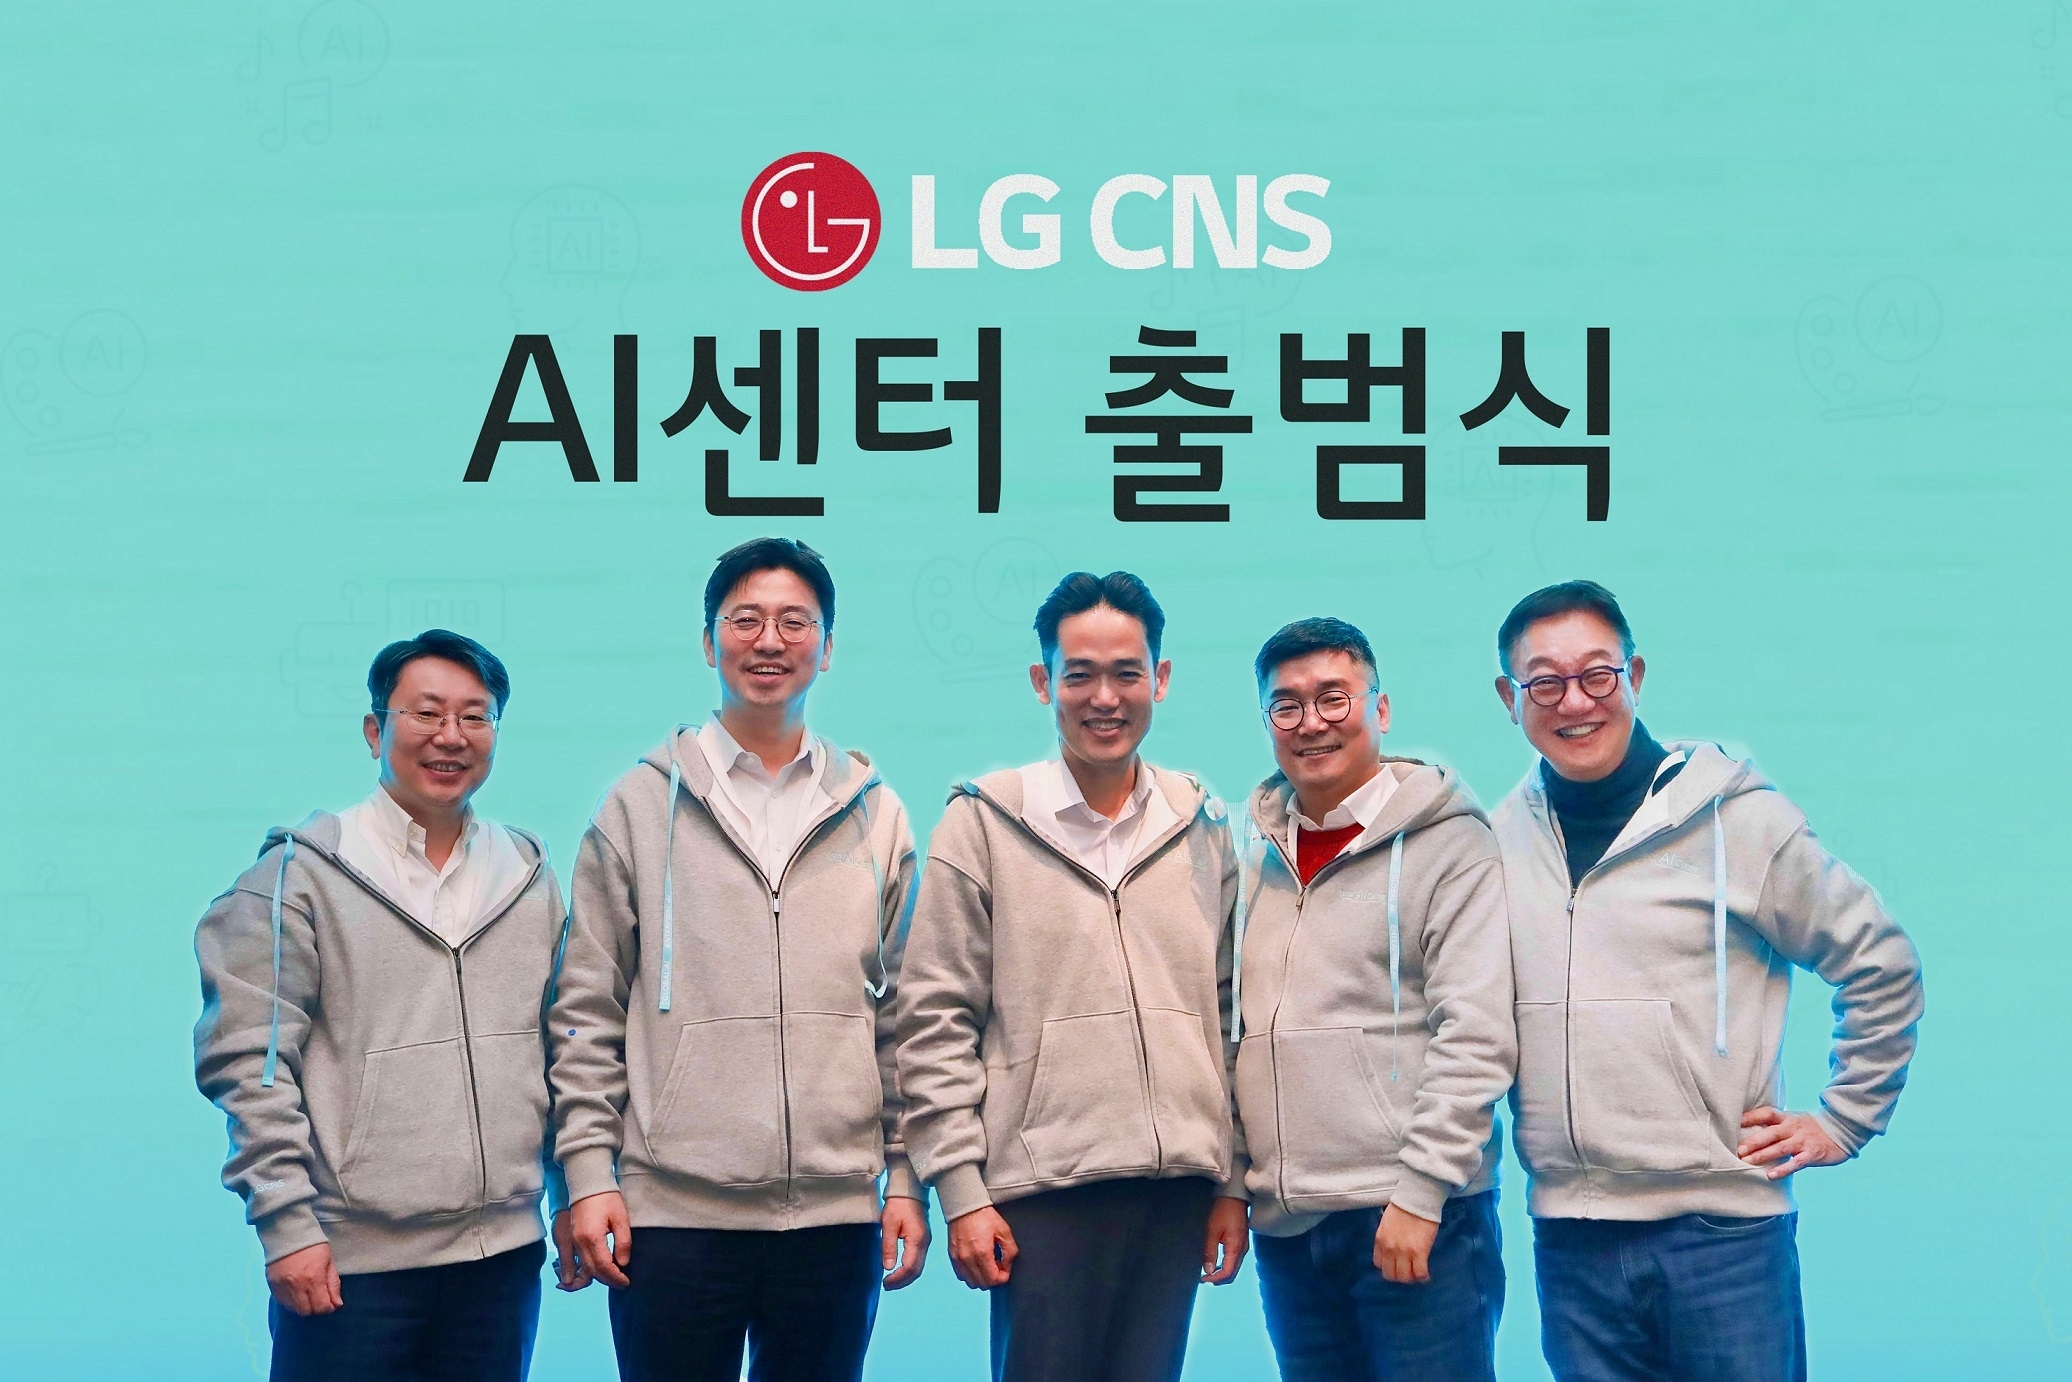 LG CNS가 올해 AI센터를 출범하는 등 AI 관련 사업을 강화하고 있다. / 사진=LG CNS